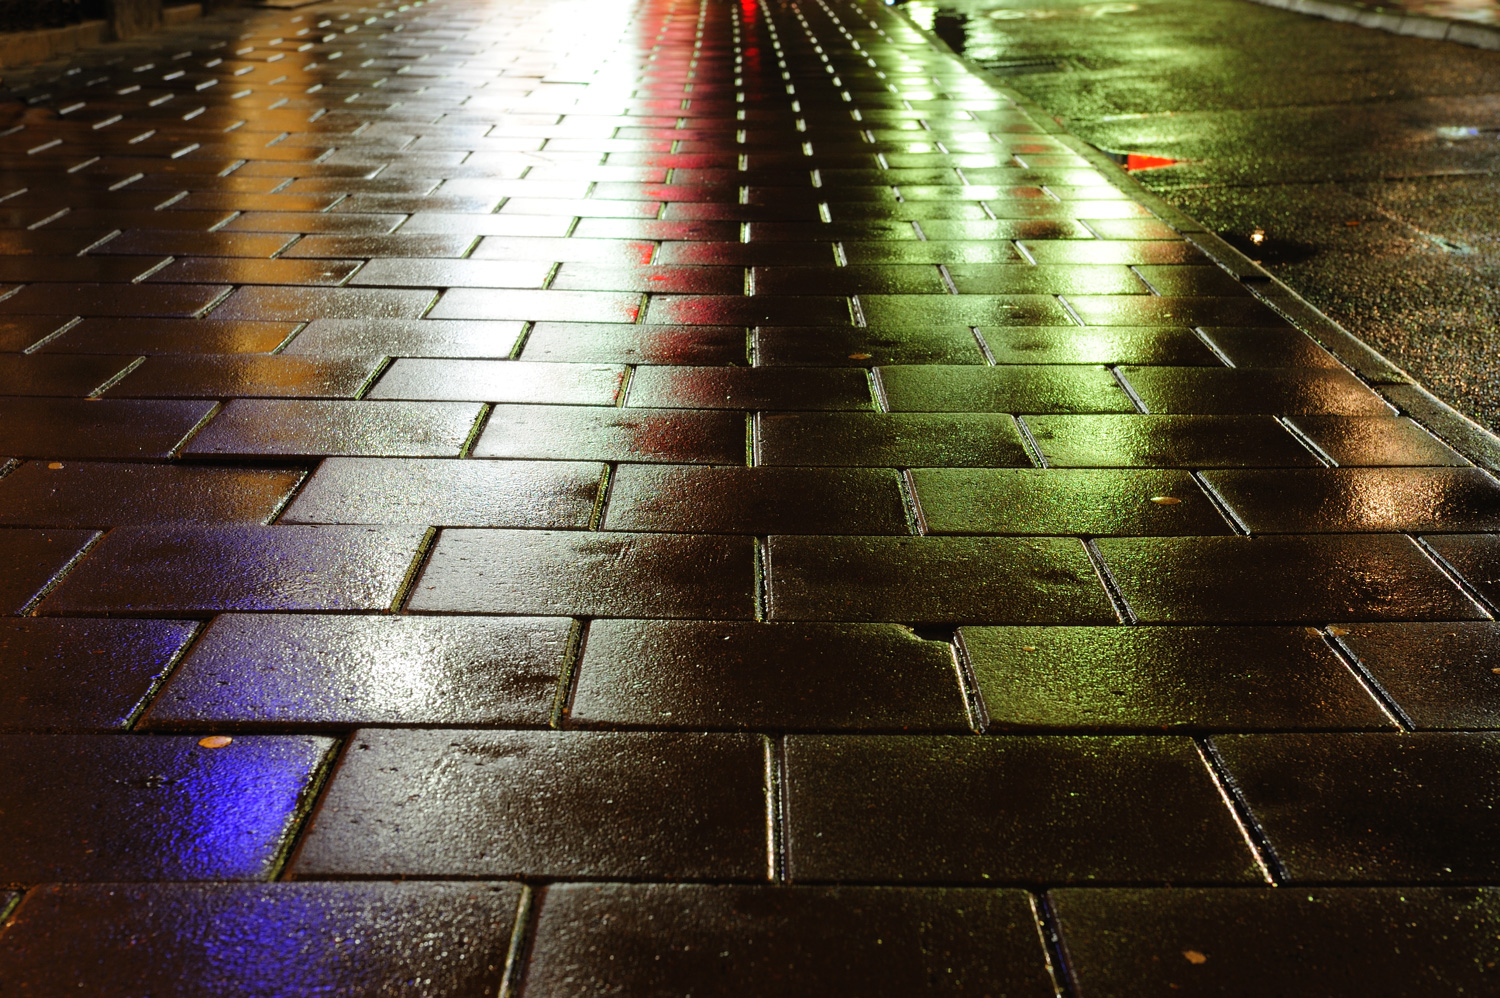 Rain wet sidewalk reflecting blue-white-yellow light